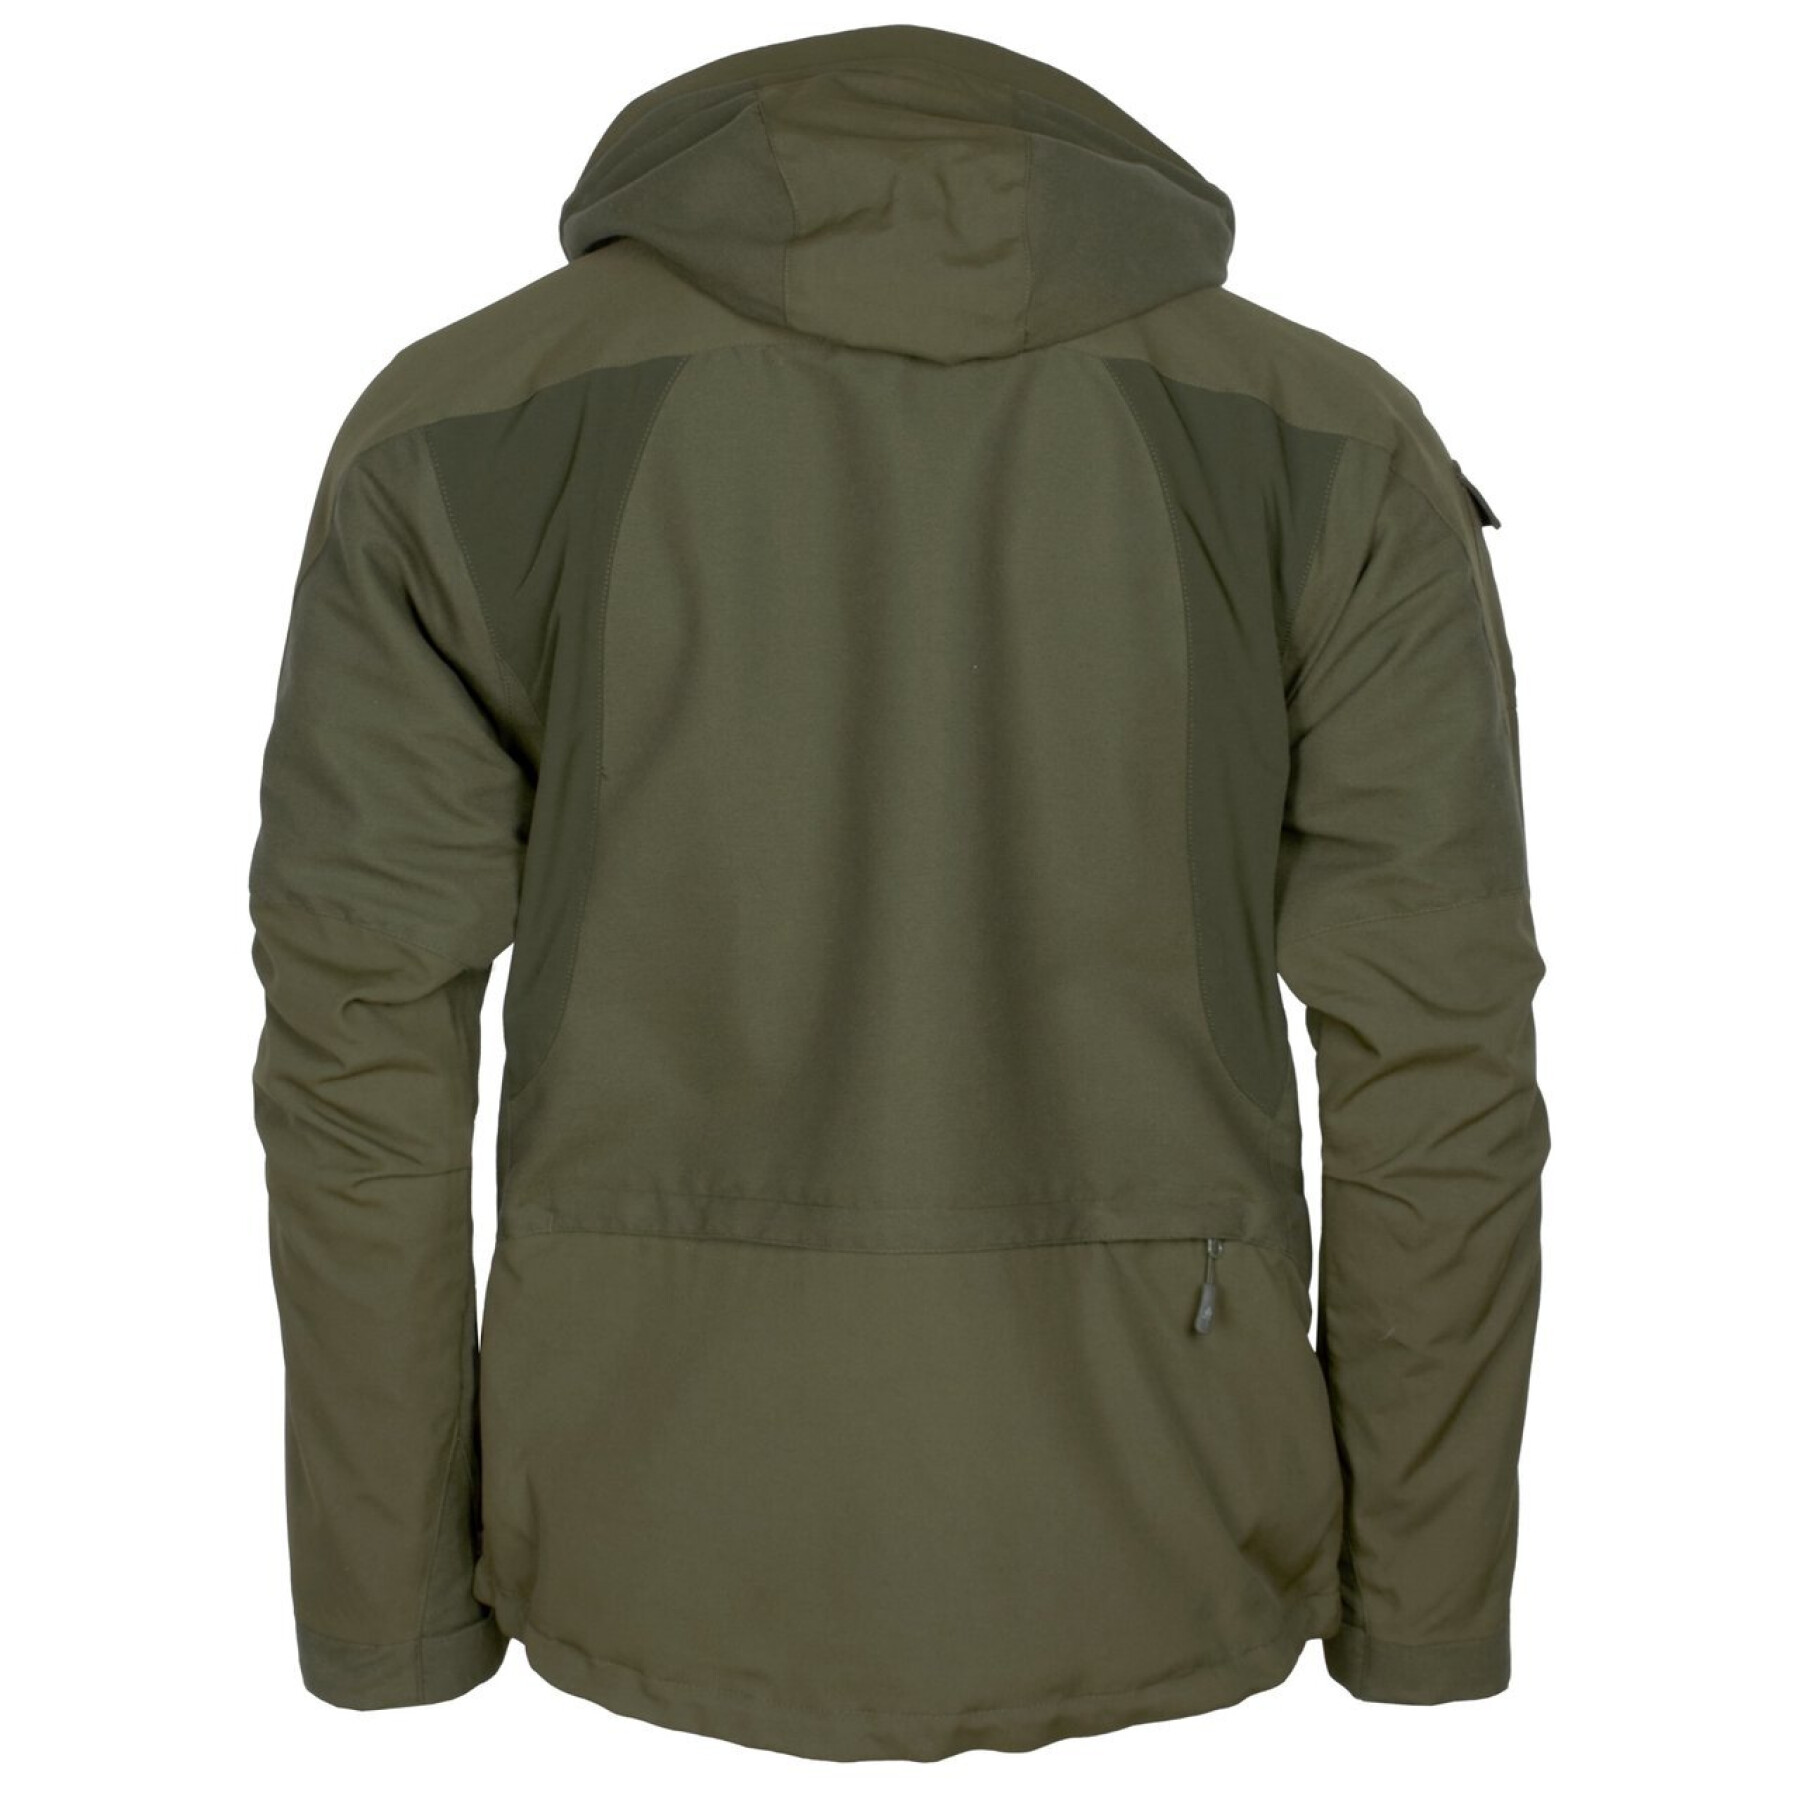 Waterproof jacket Pinewood Hunter Pro Xtr 2.0